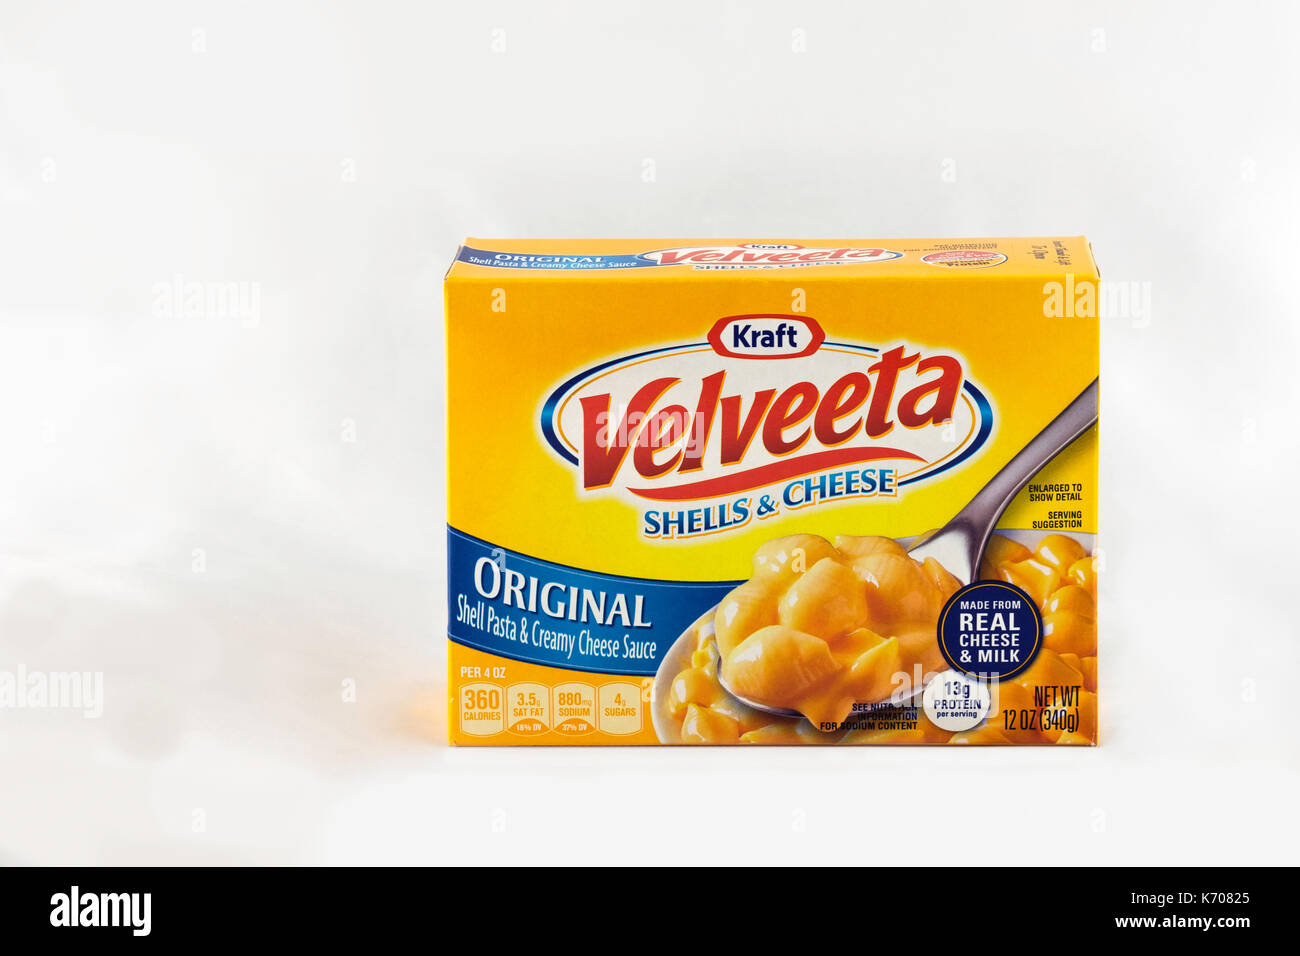 A box of Kraft Velveeta Shells & Cheese, a macaroni product, on a white background. Cutout, cut out. Stock Photo